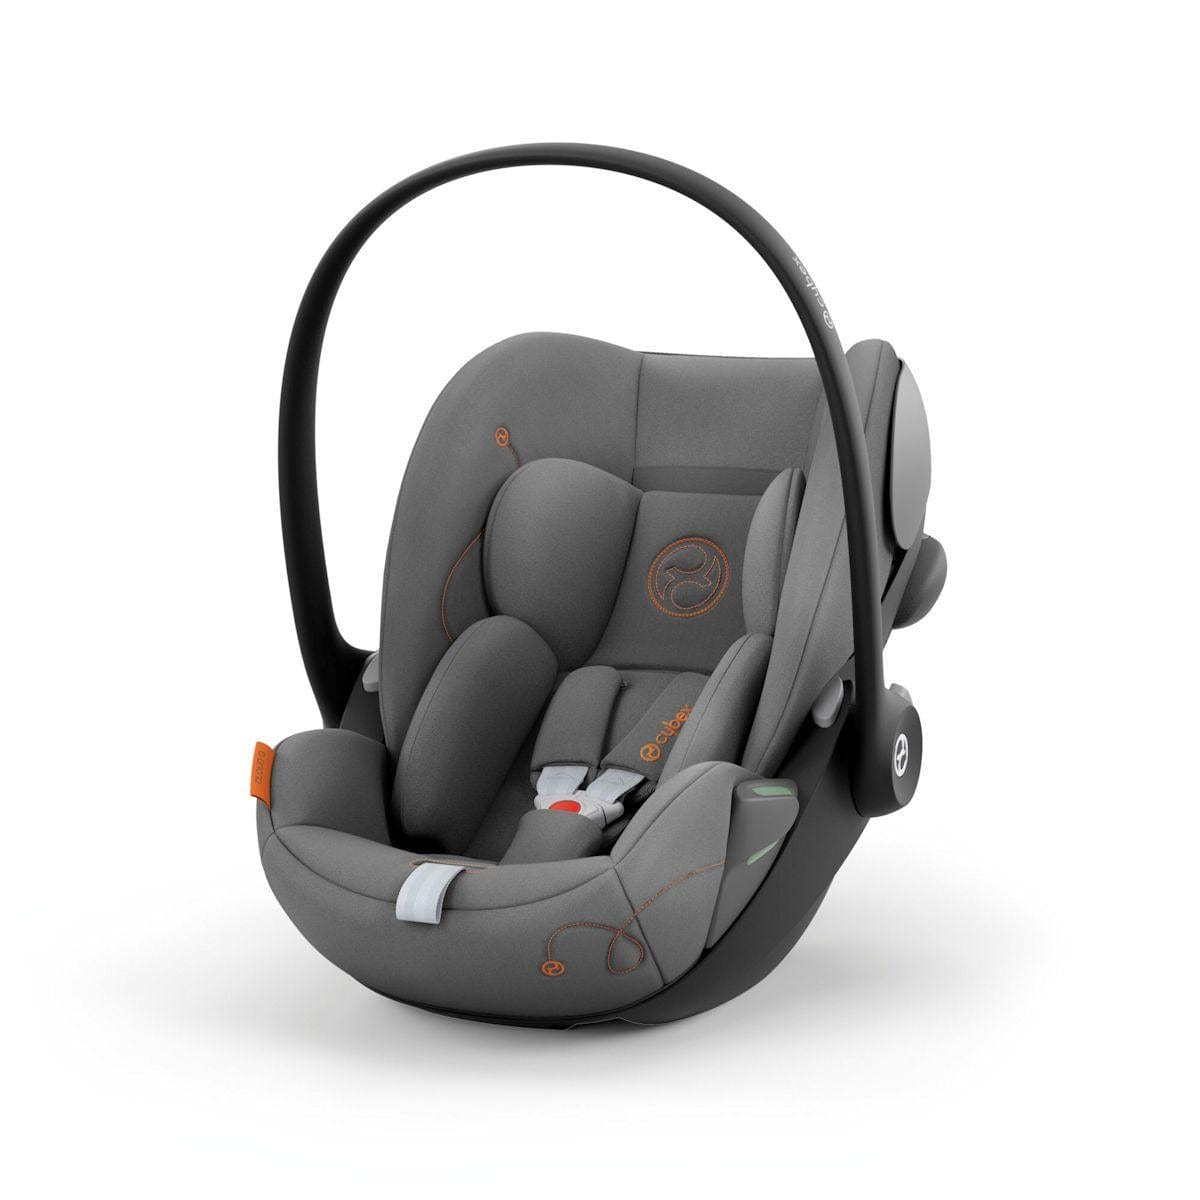 Cybex baby car seats Cybex G i-Size Car Seat Bundle - Lava Grey 15302-LAV-GRY